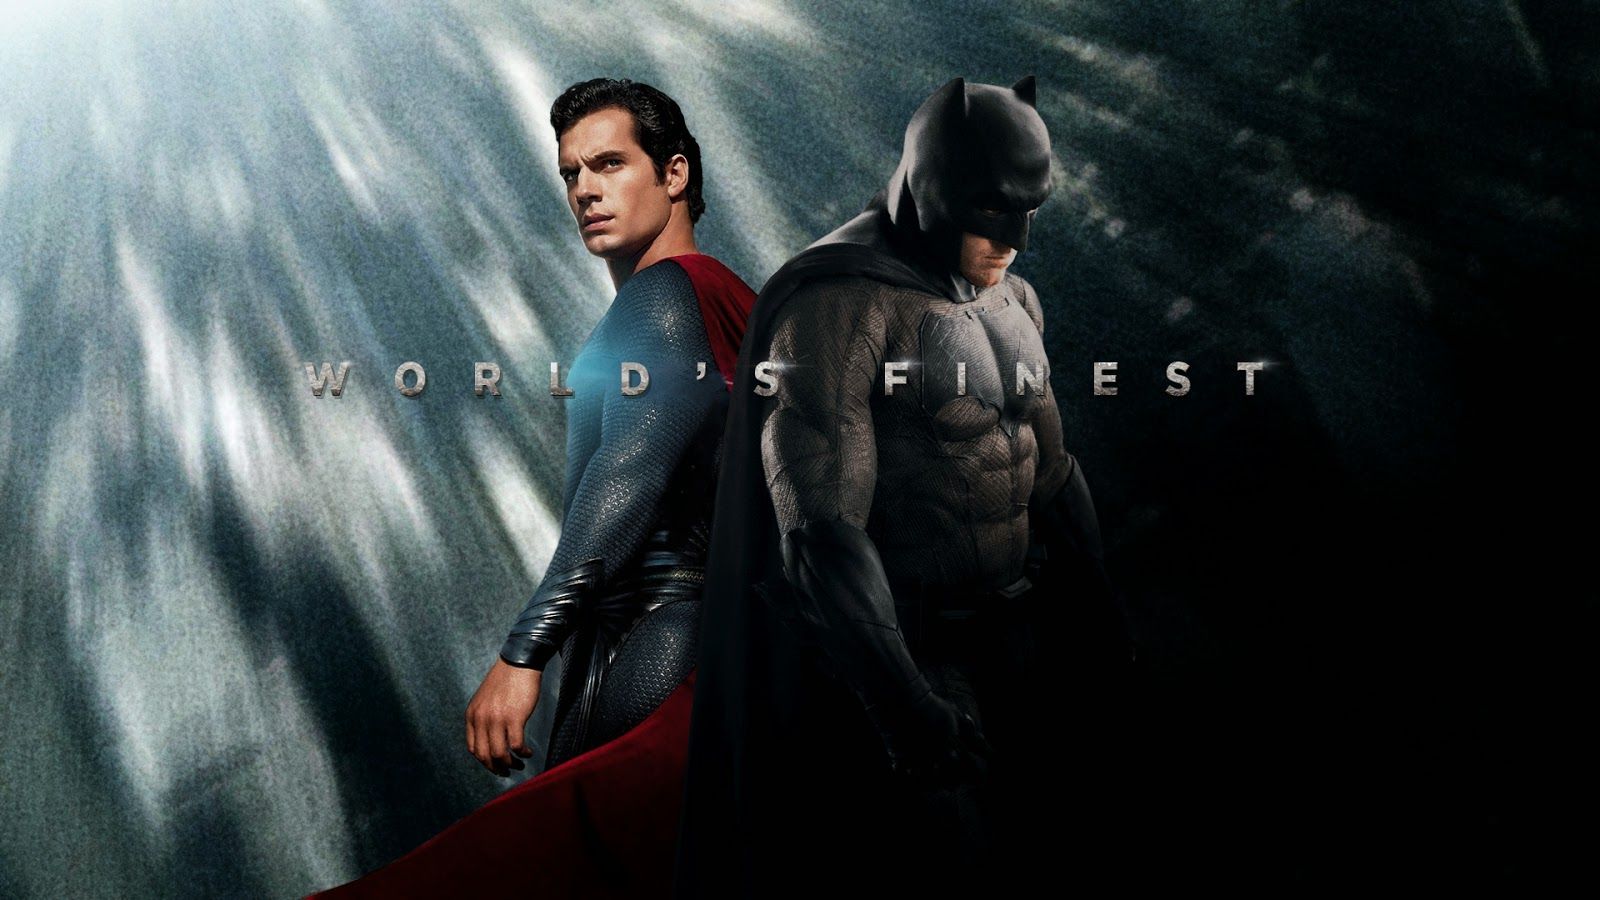 Batman vs superman dawn of justice for-androids – HD WALLPAPER WIDE